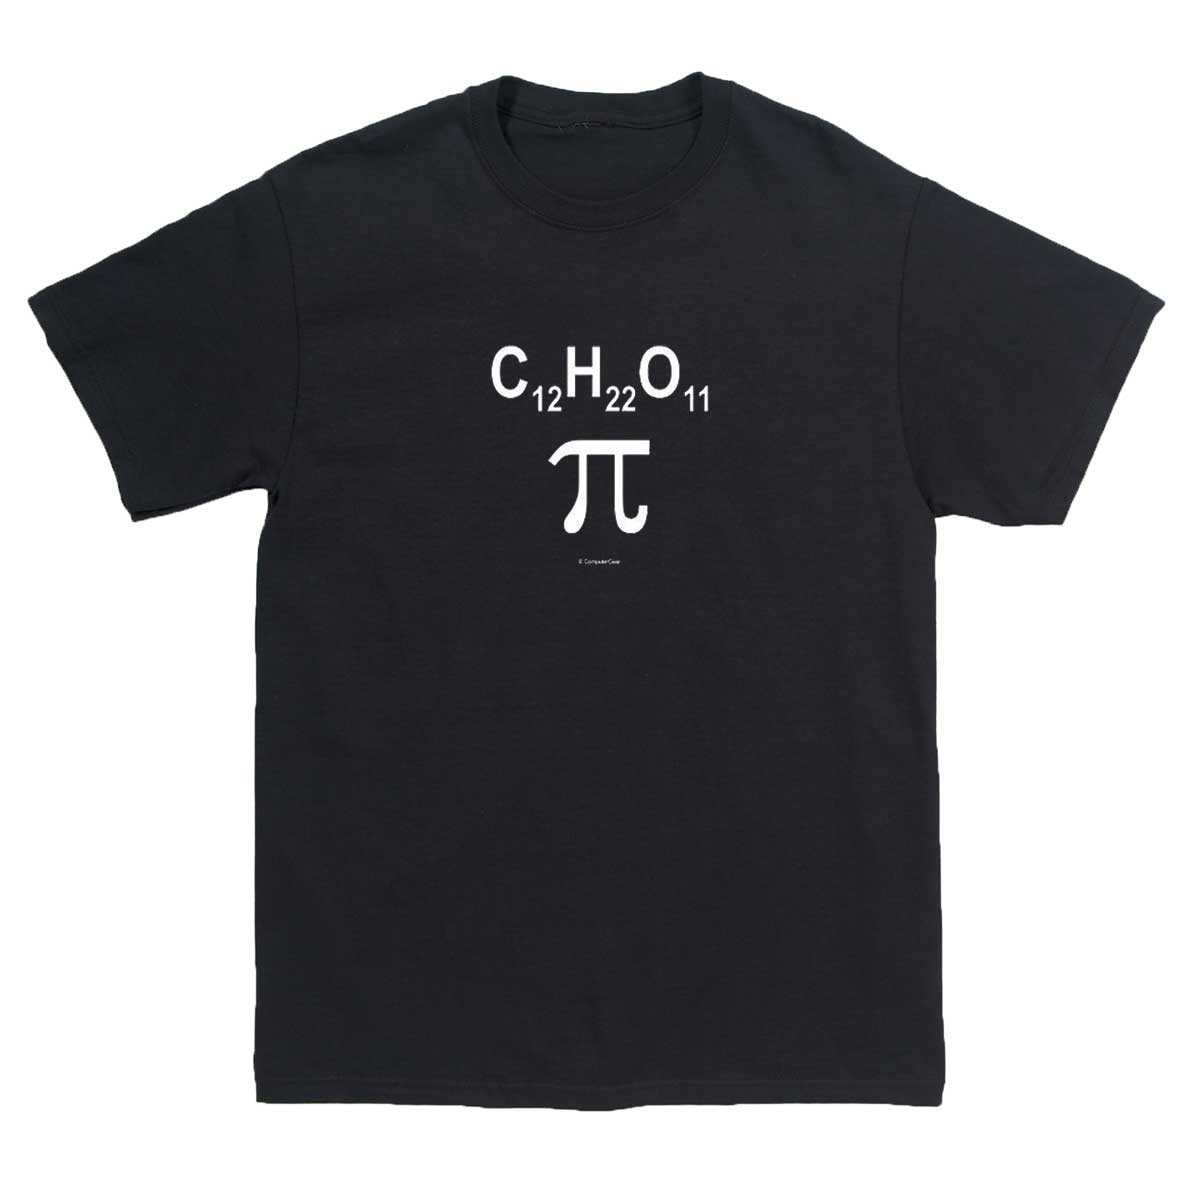 Creative Pi Day Shirt Ideas
 Smart girls won t mind being called a Sugar Pi wearing